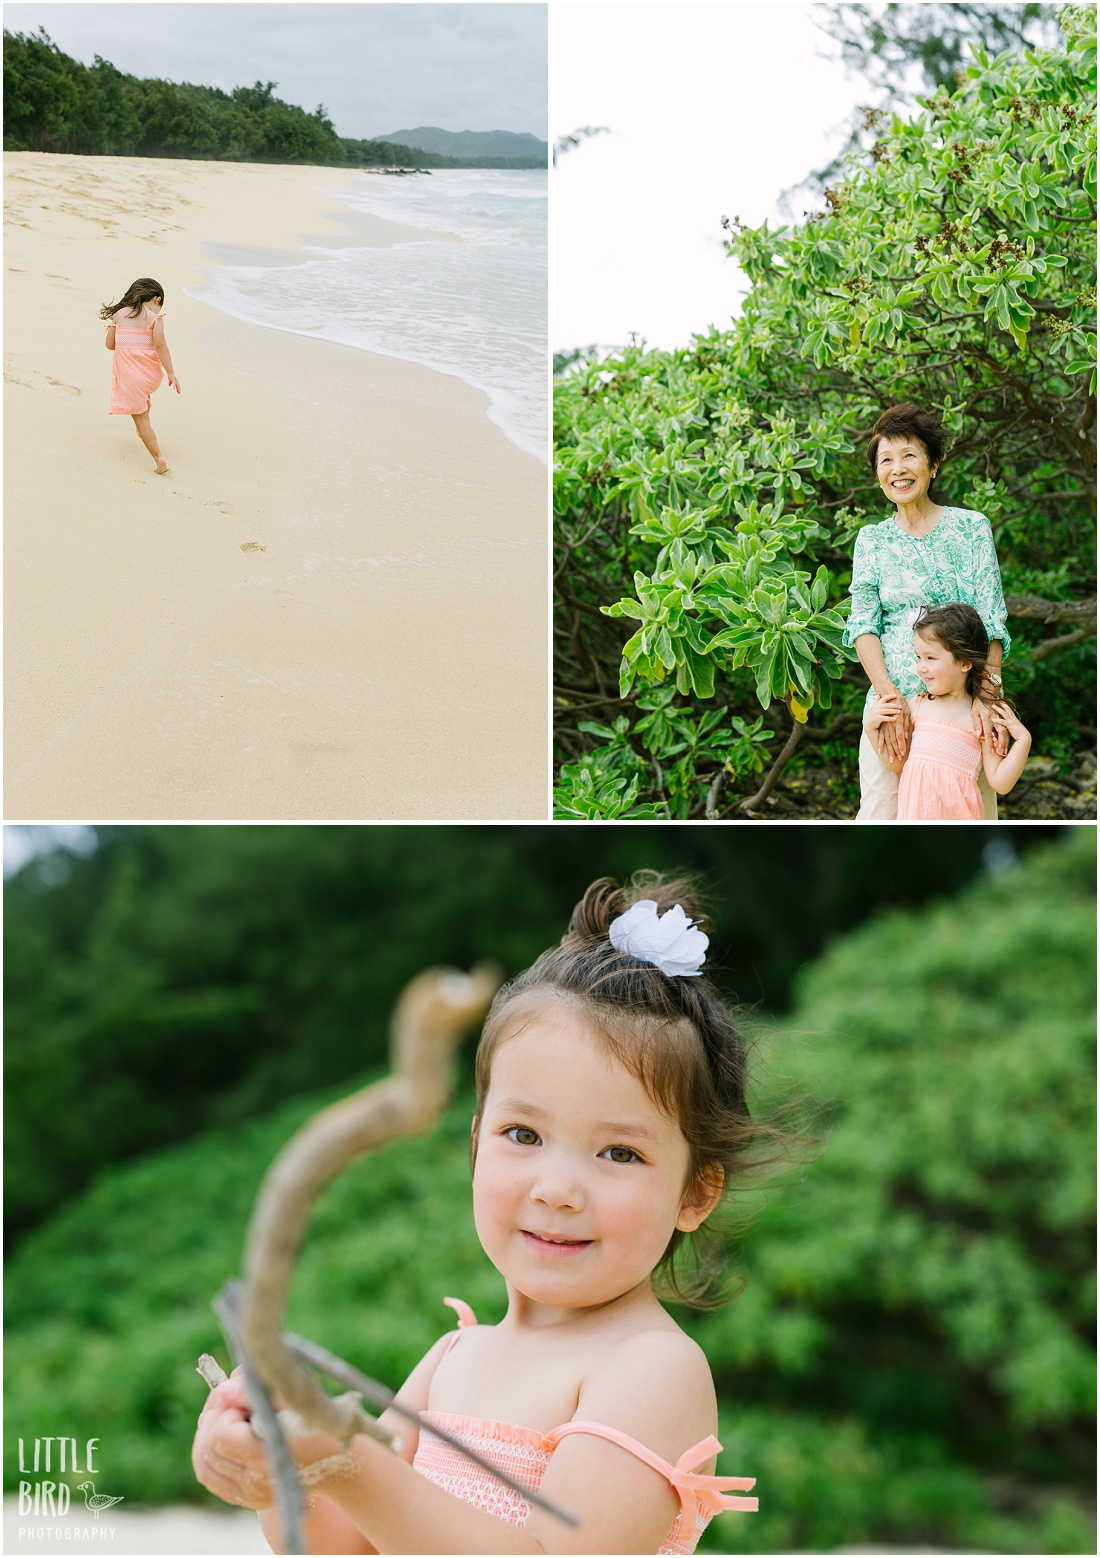 fun beach portraits in hawaii